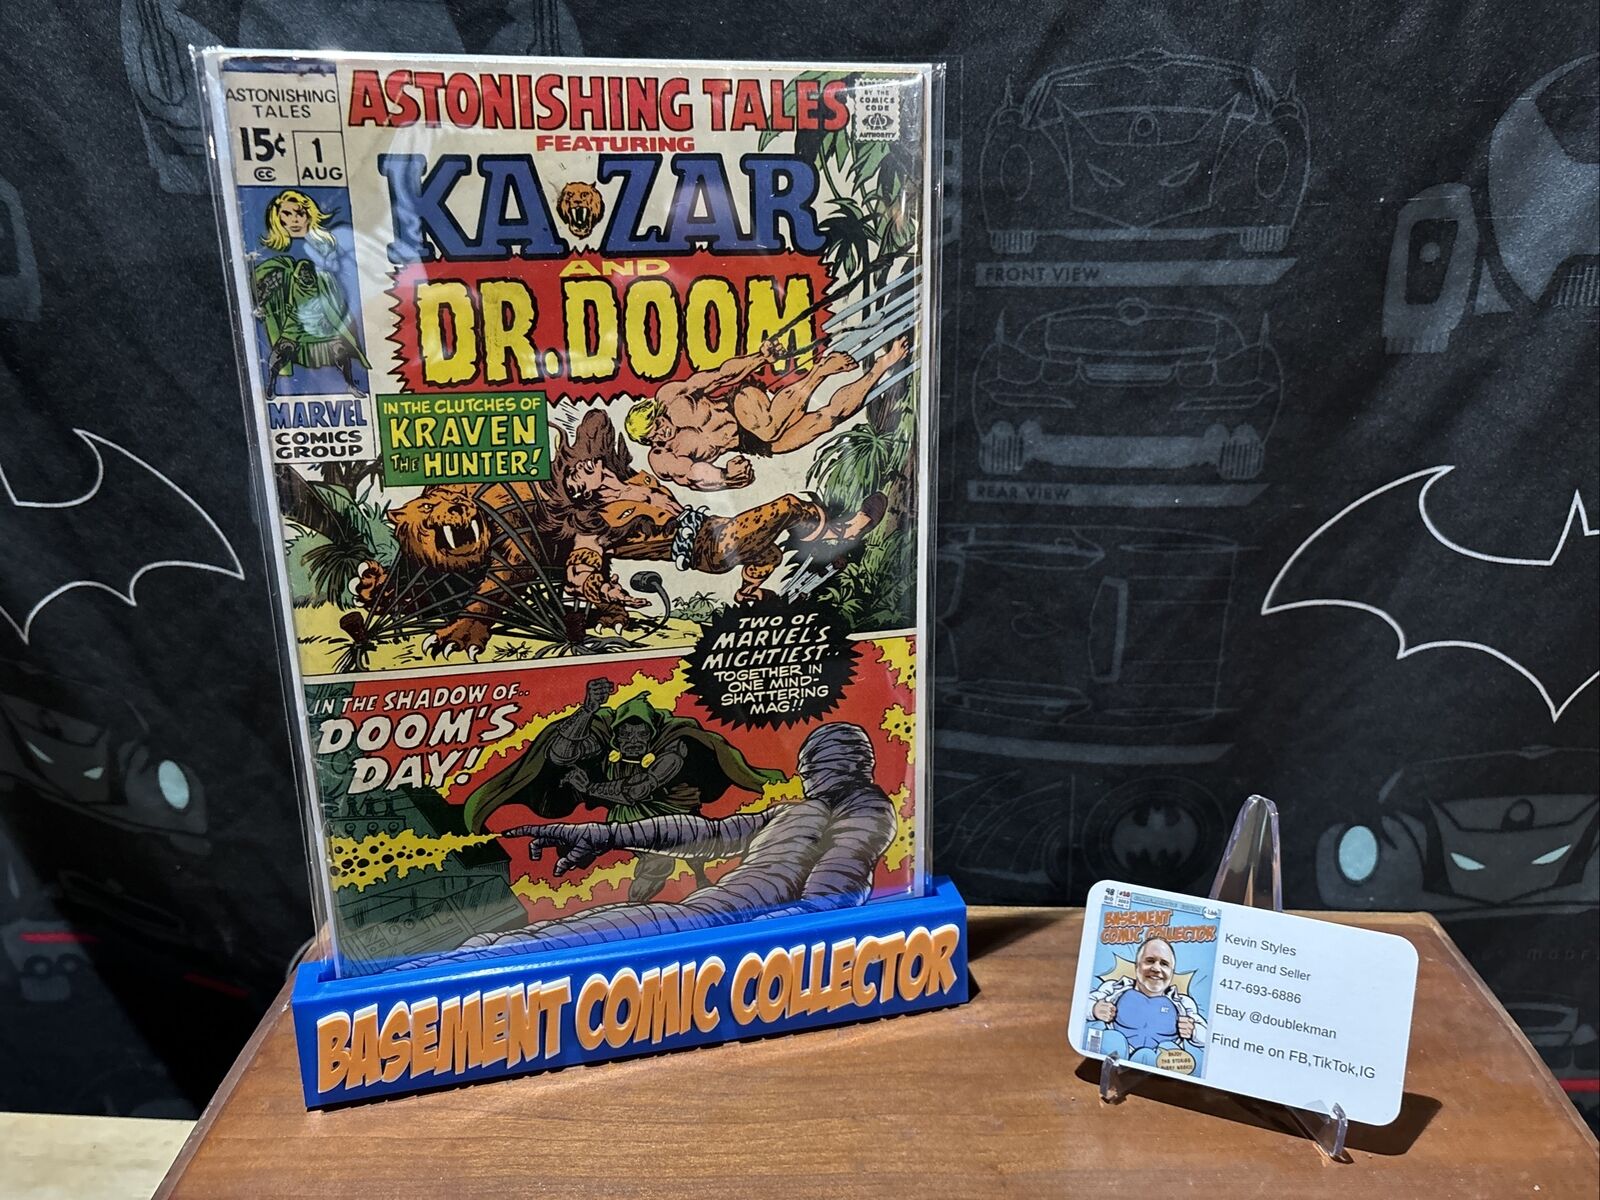 Astonishing Tales #1 1970 - Stan Lee Story, Ka-Zar and Doctor Doom.